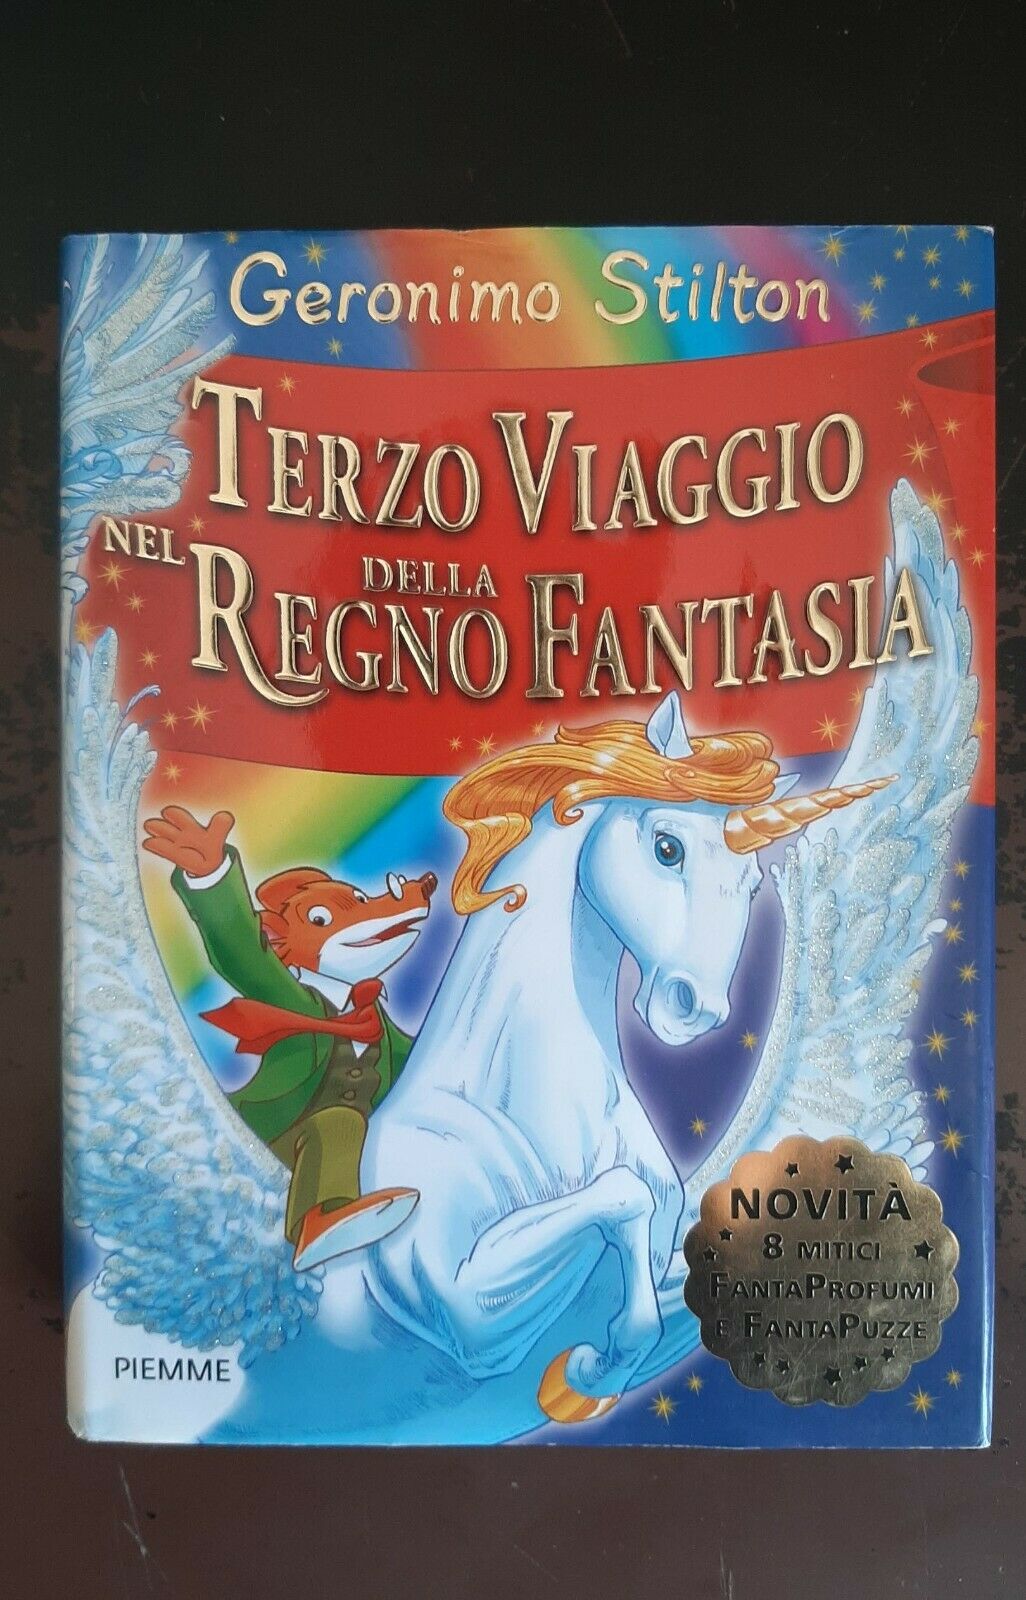 Third journey into the realm of fantasy Geronimo Stilton hardcover